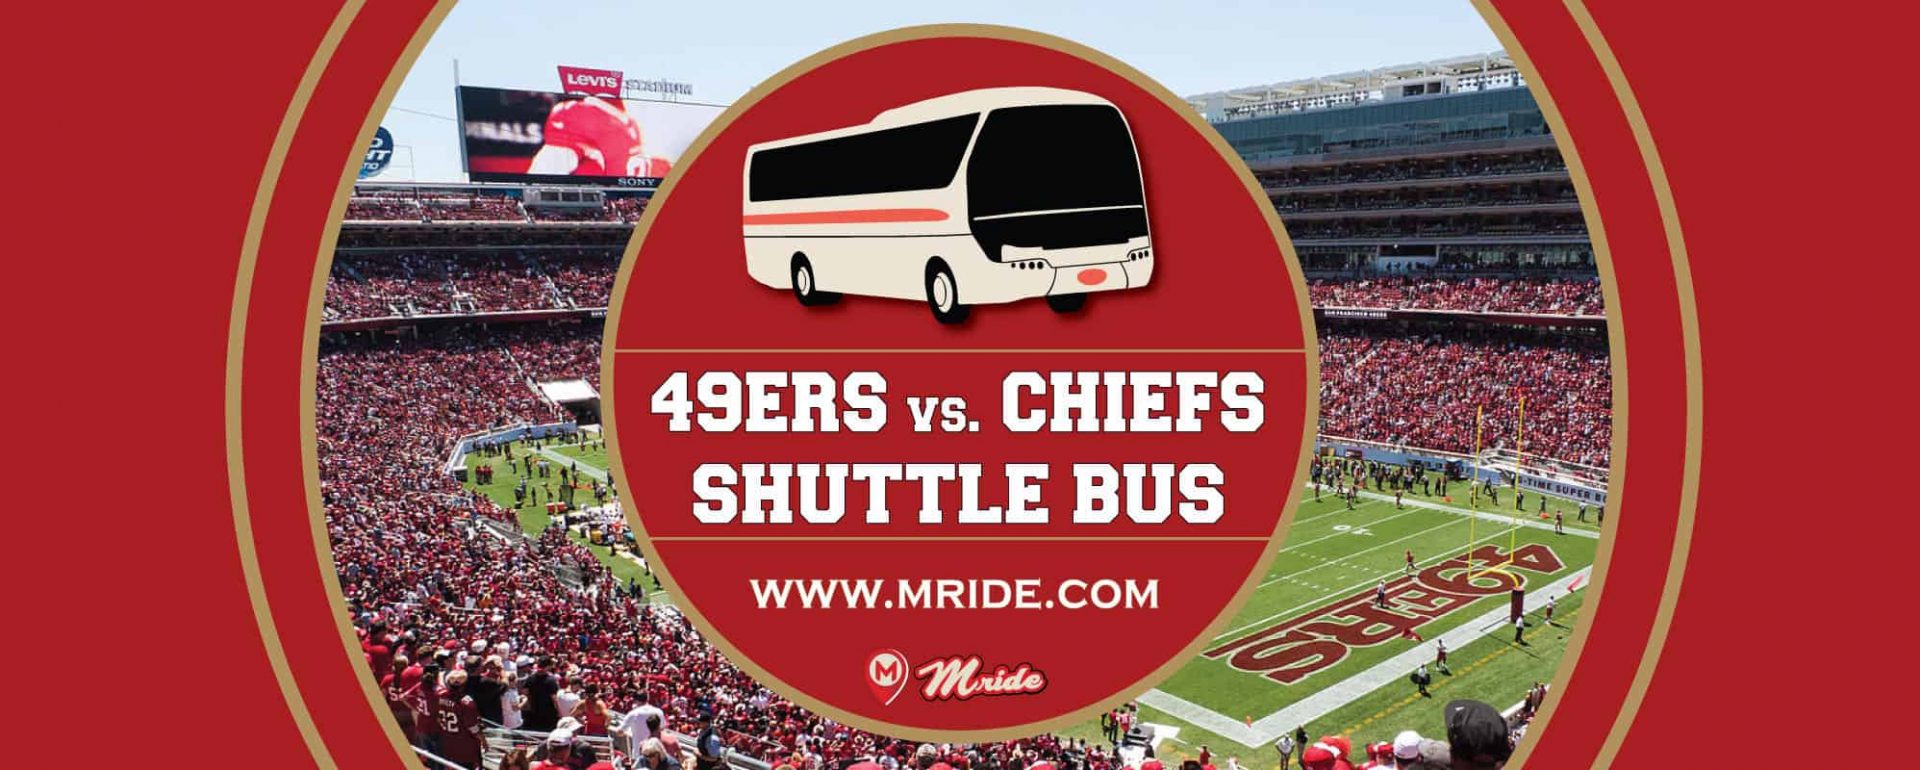 Levis-Stadium-Shuttle-Bus-49ers-Chiefs